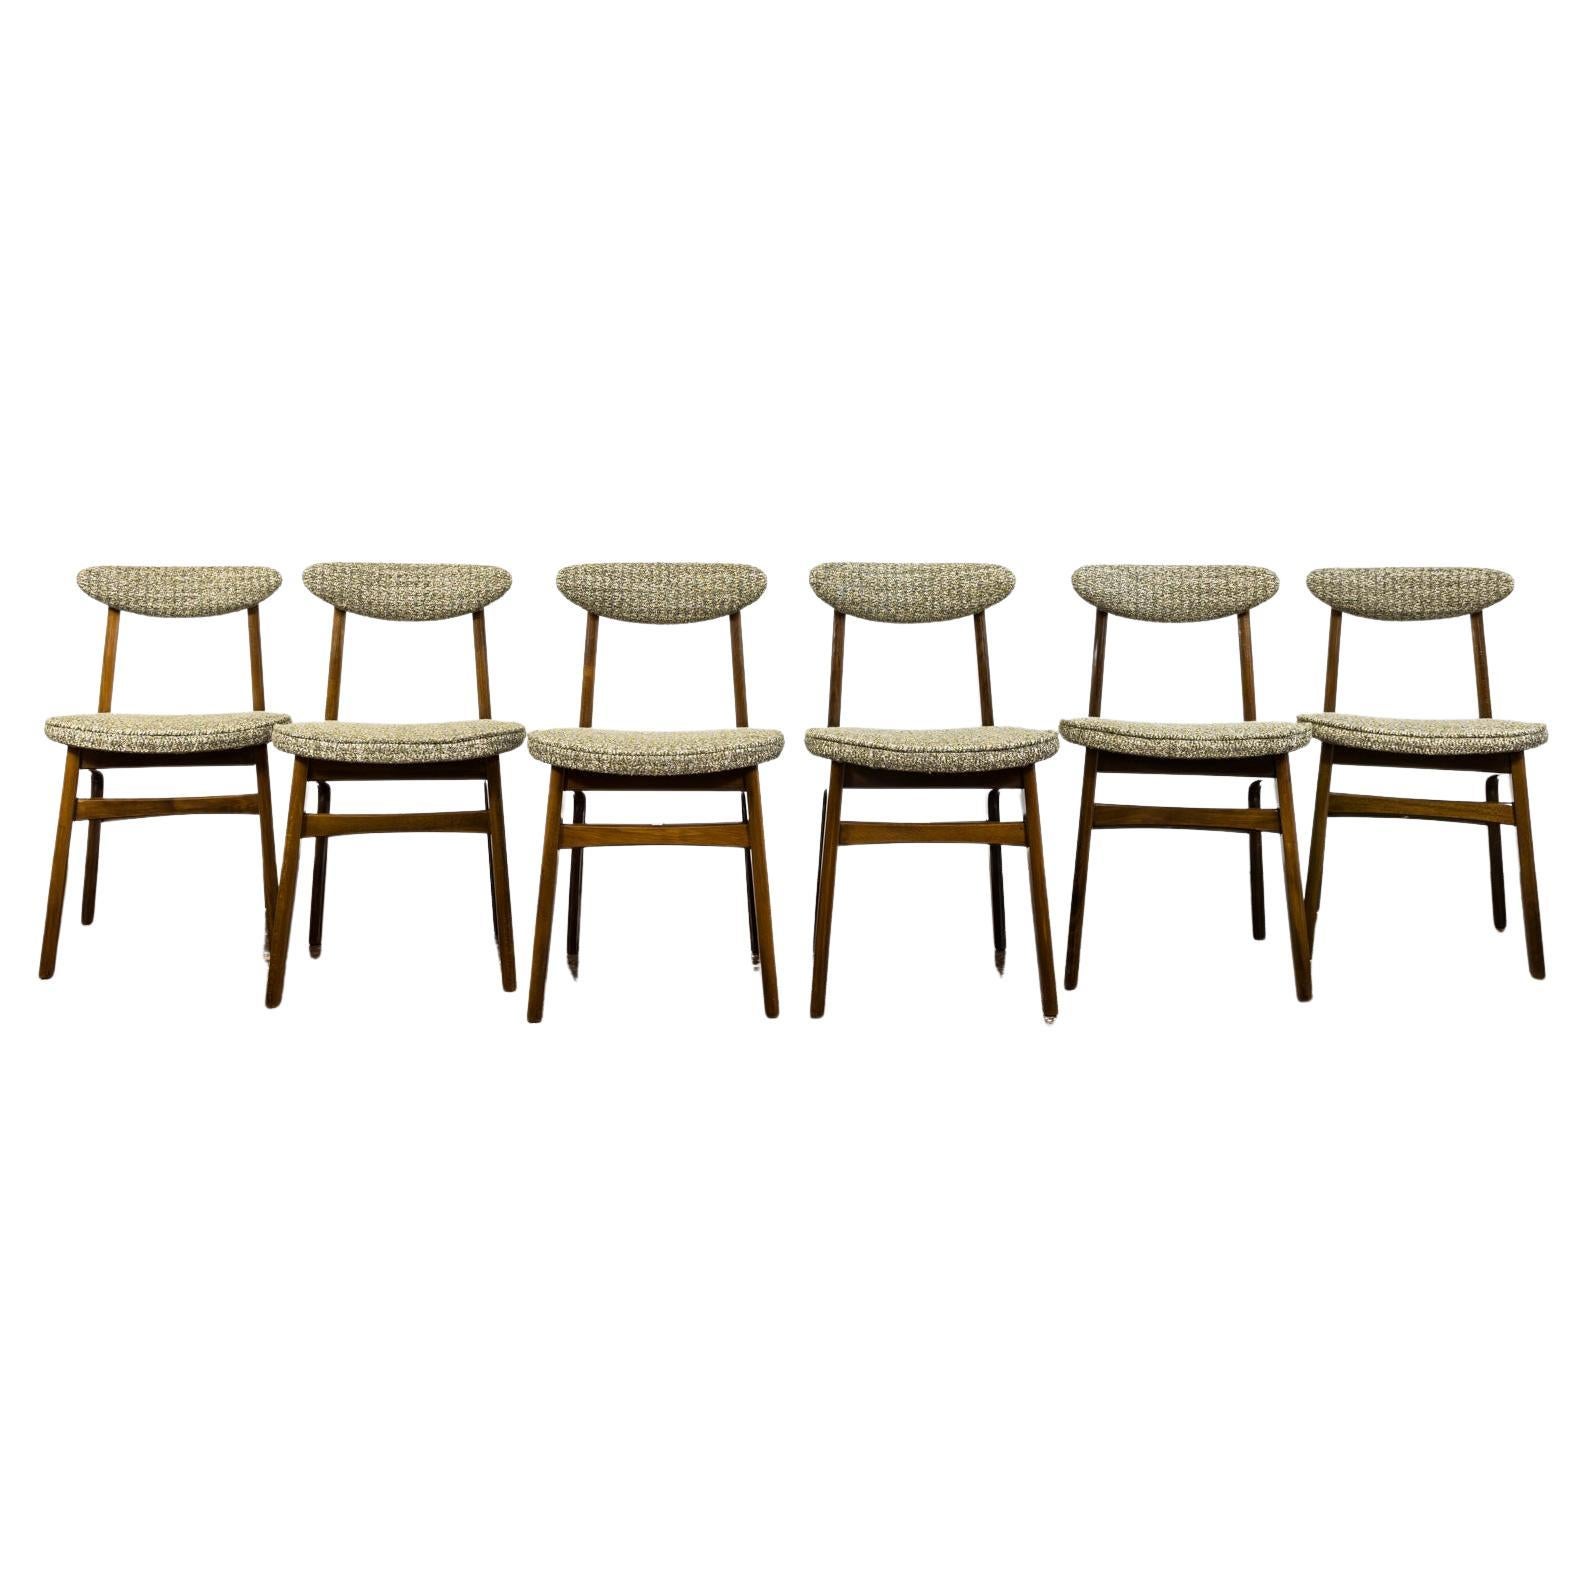 Set of 6 restored dining chairs by Rajmund Teofil Hałas 1960's